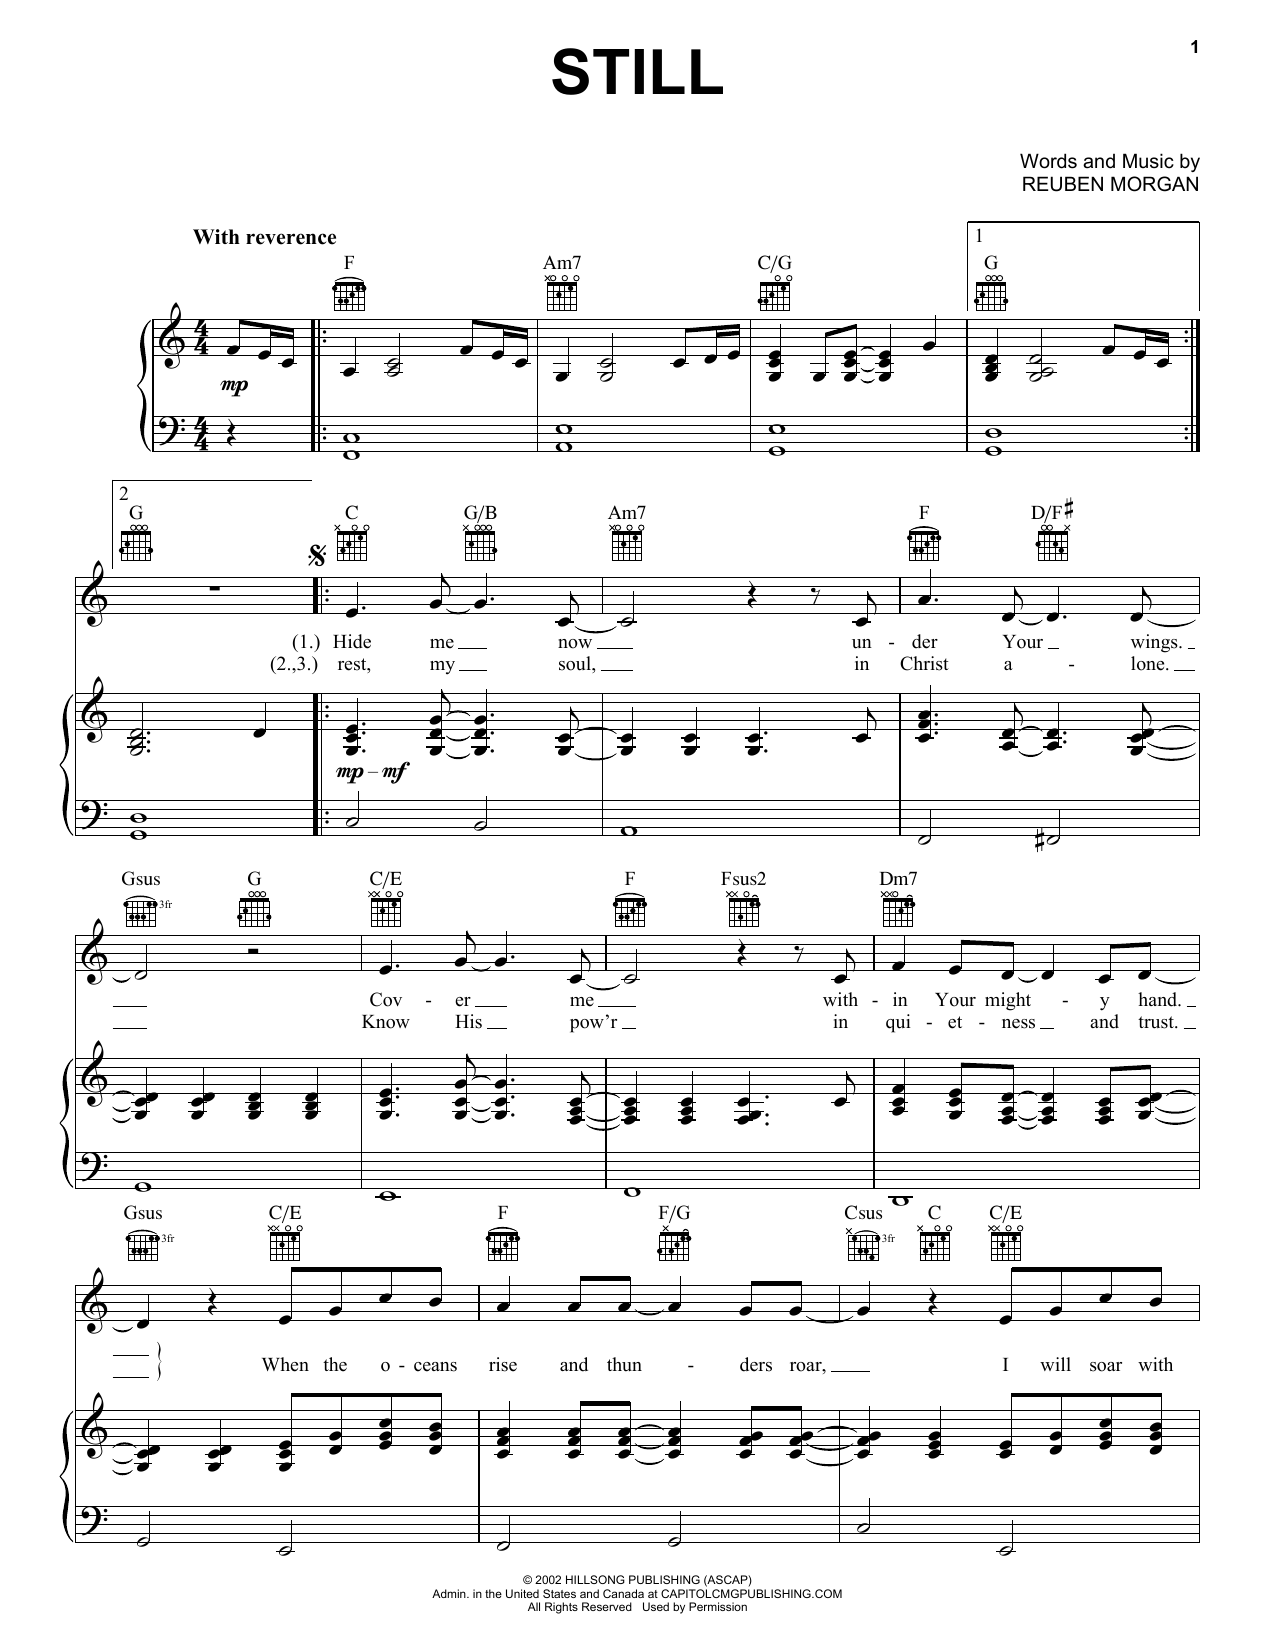 Reuben Morgan Still Sheet Music Notes & Chords for Melody Line, Lyrics & Chords - Download or Print PDF